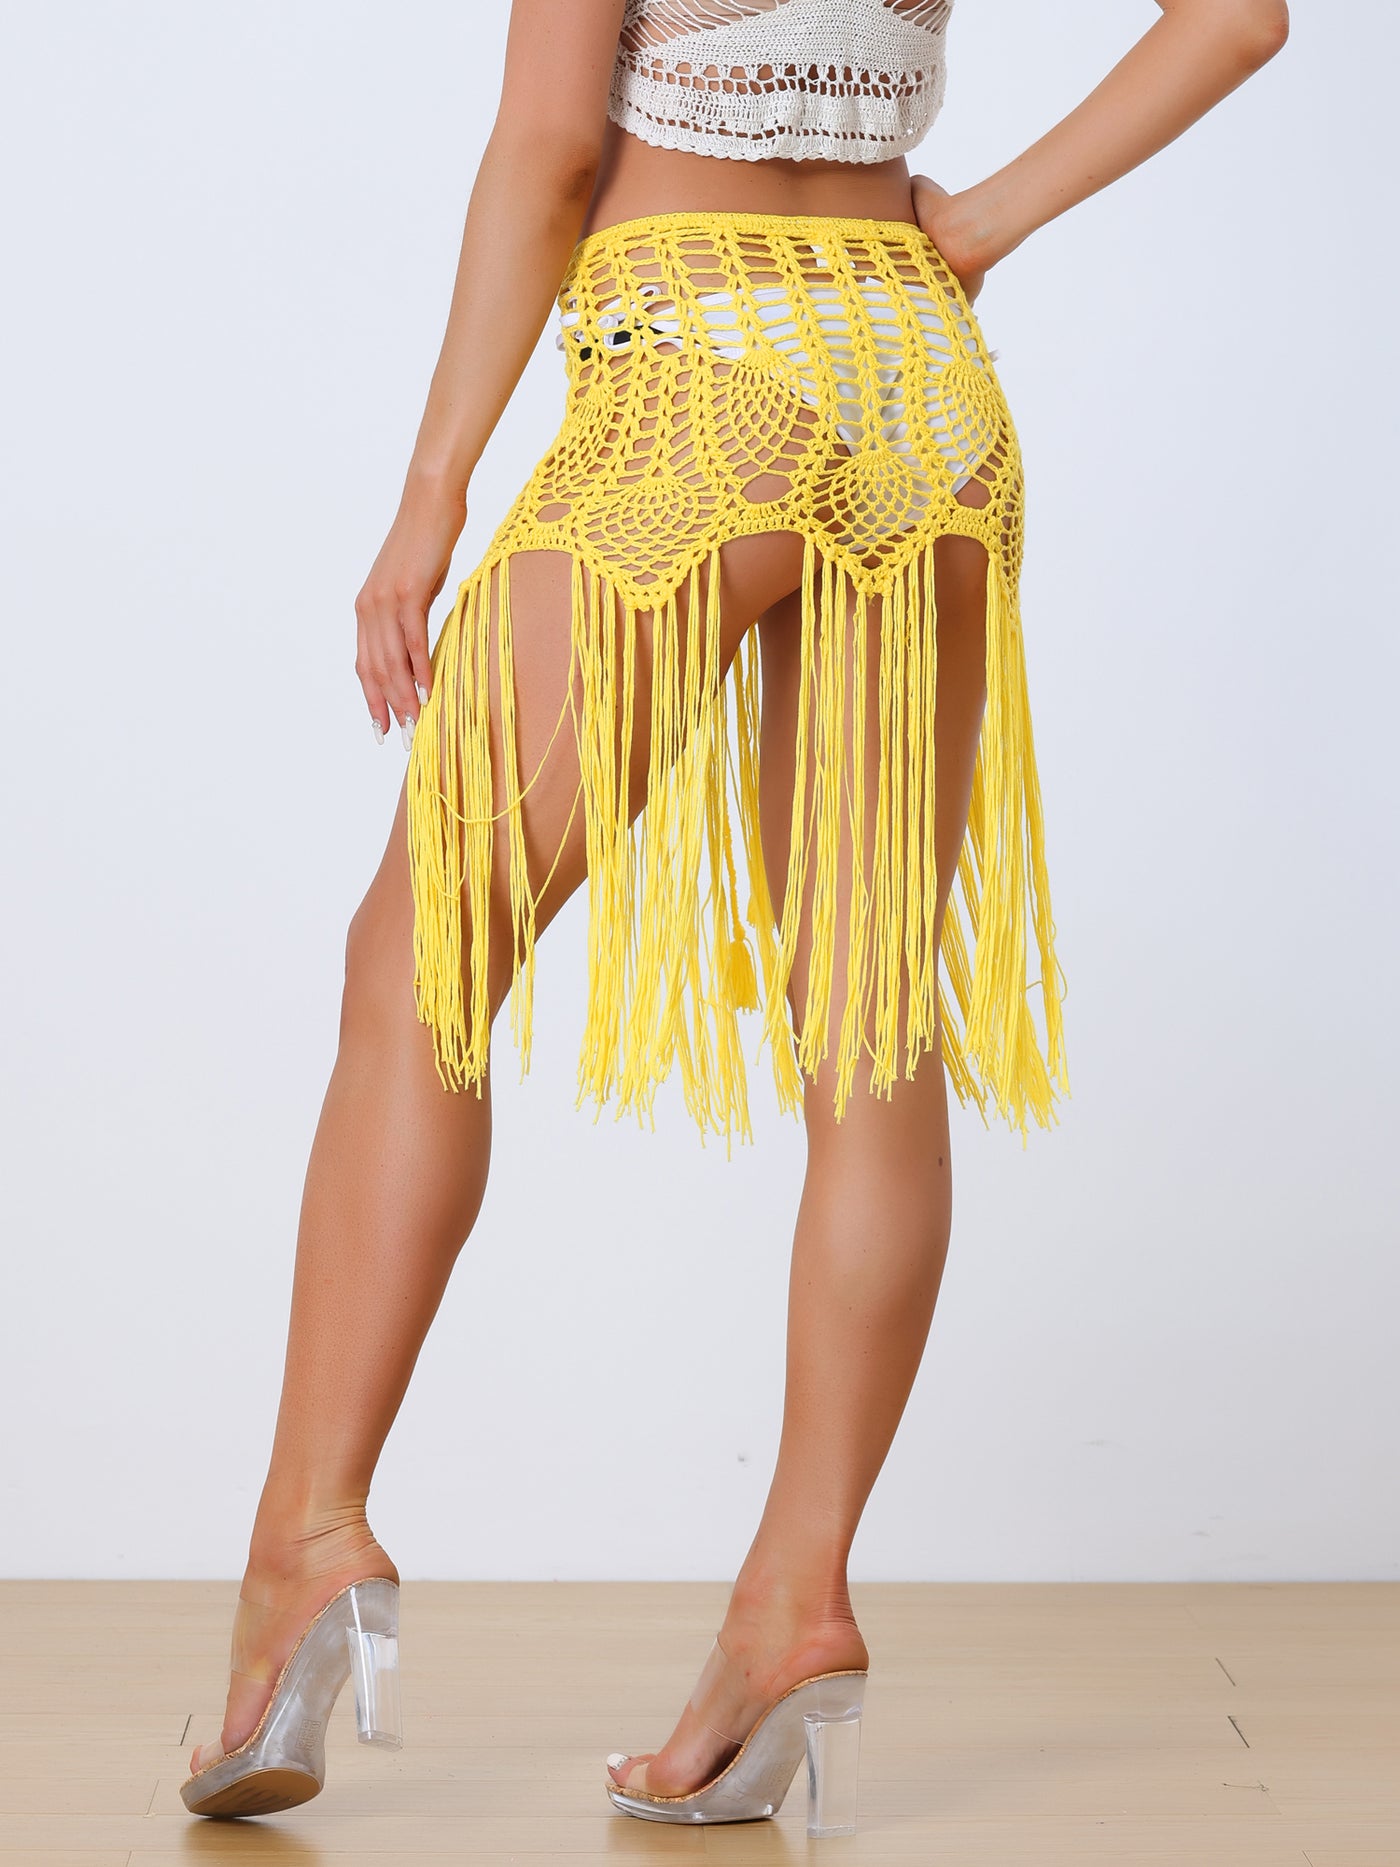 Allegra K Women's Crochet Sexy Summer Beach Swimsuit Tassel Cover-Up Skirt